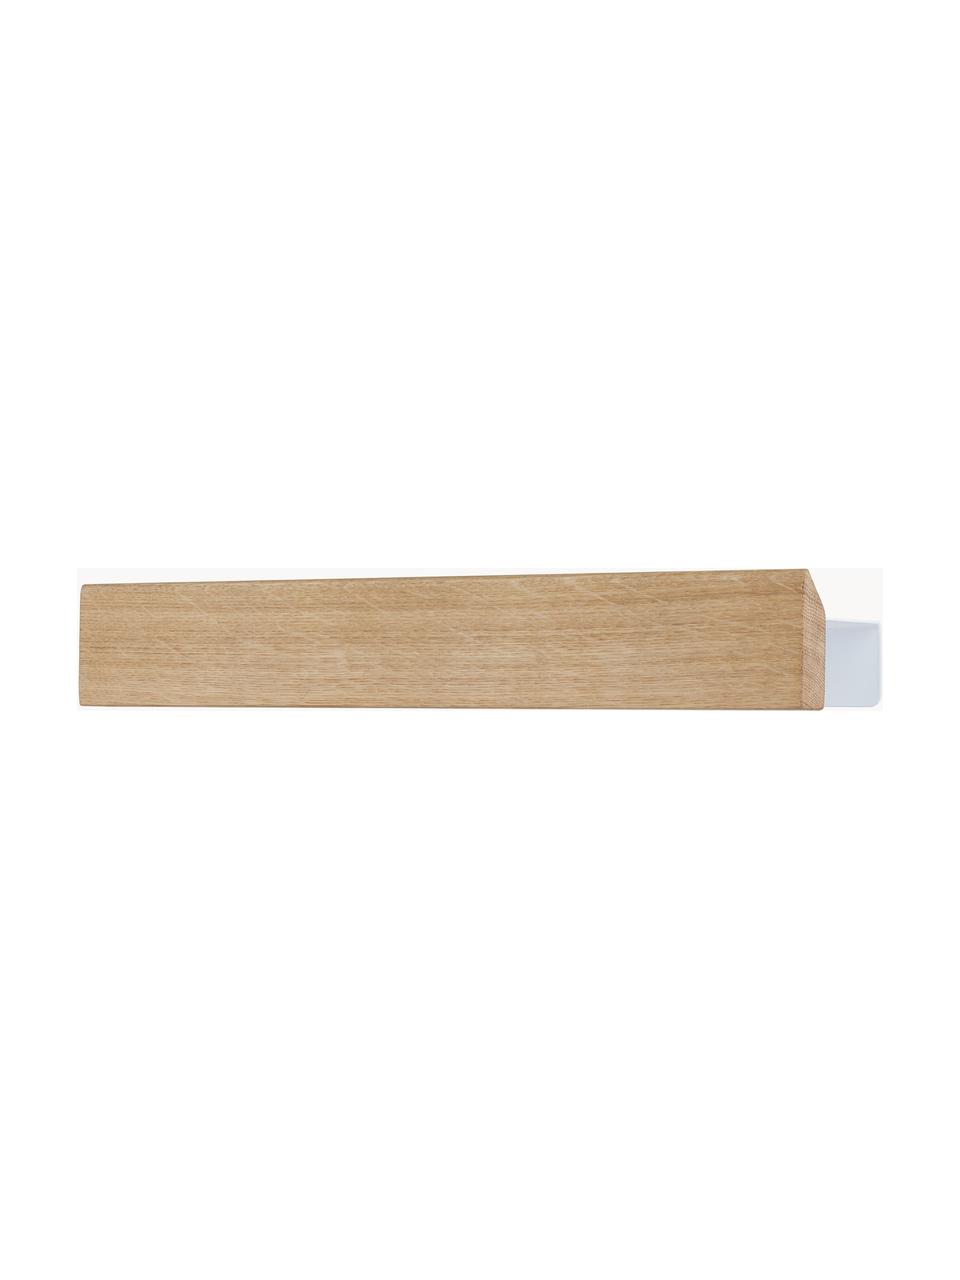 Magneetlijst Flex, Lijst: eikenhout, Licht hout, wit, B 60 cm x H 6 cm